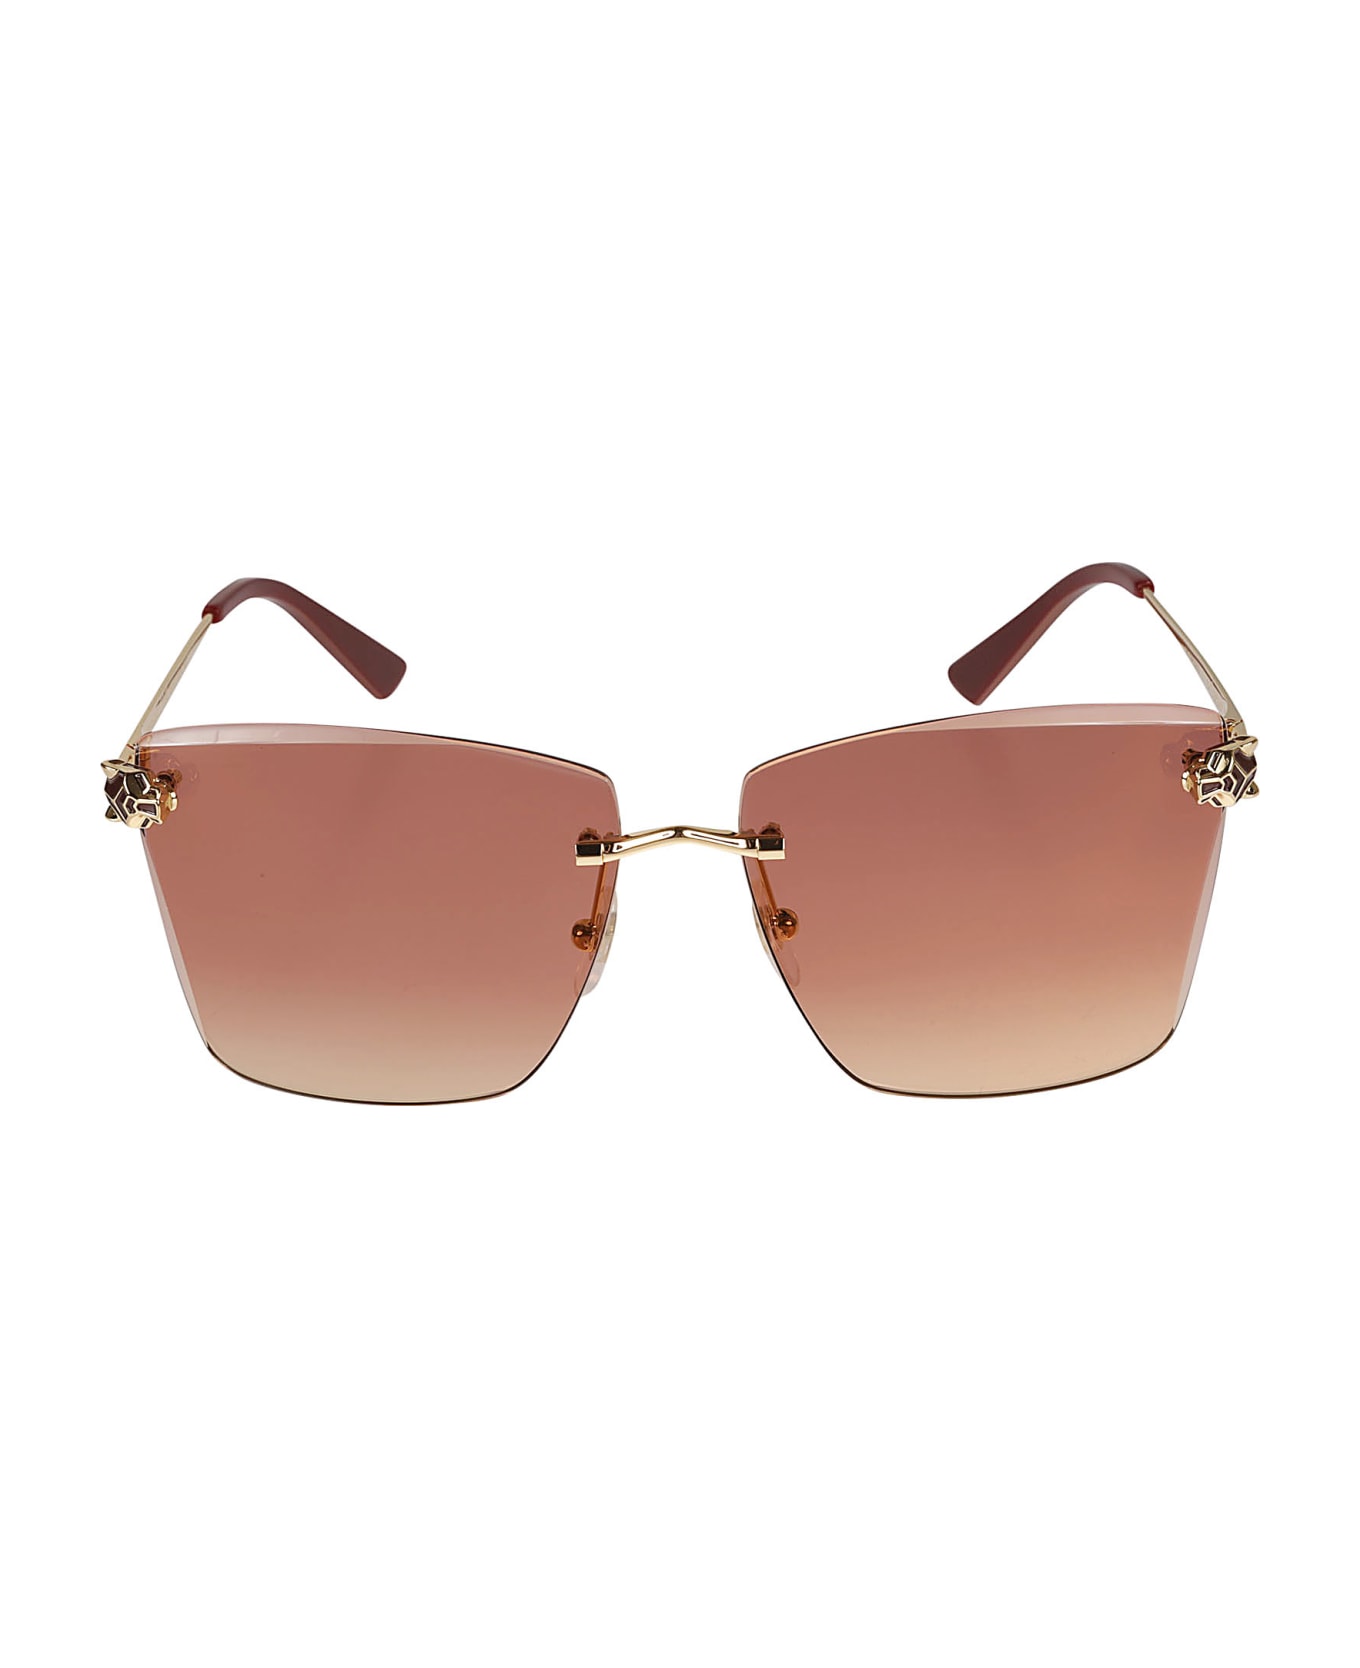 Cartier Eyewear Square Patterned Sunglasses - Gold サングラス